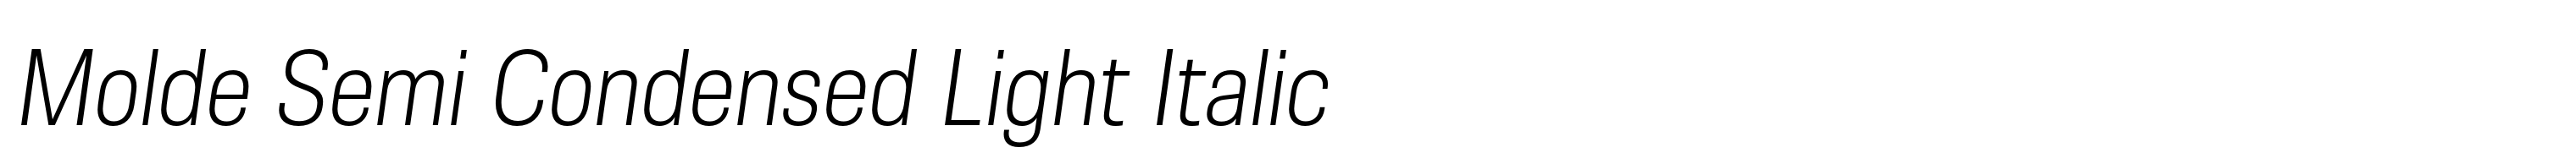 Molde Semi Condensed Light Italic